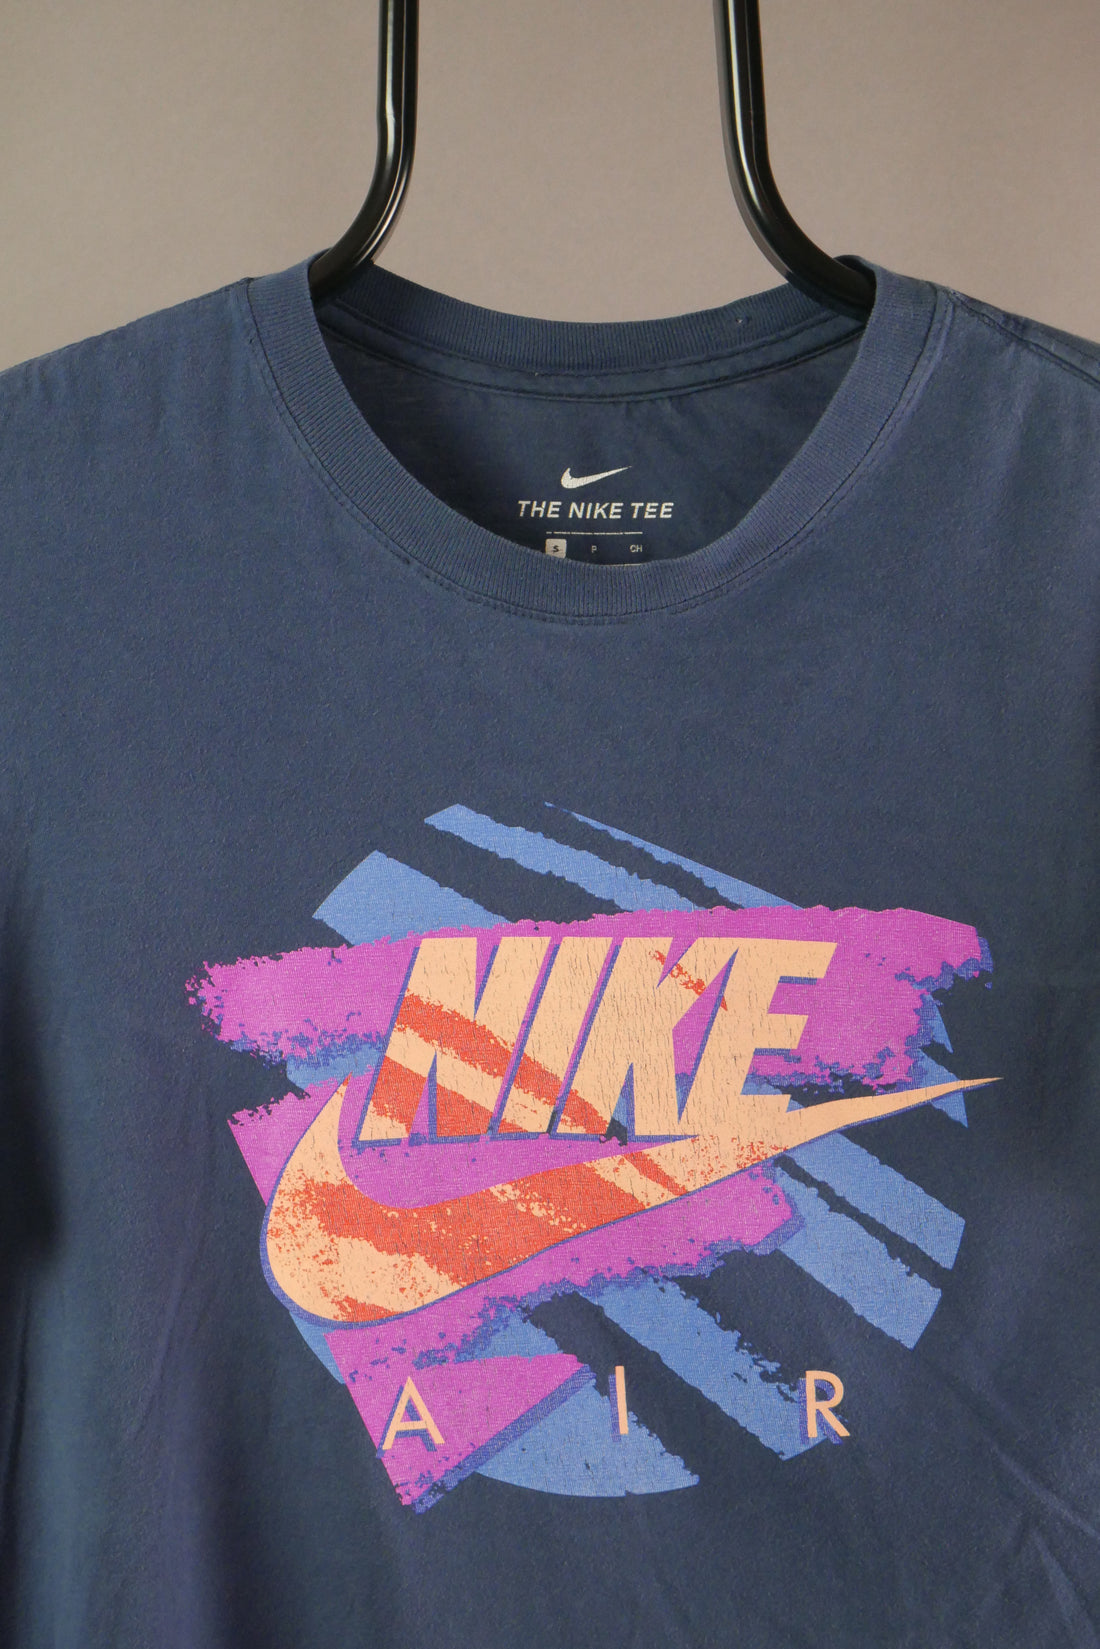 The Vintage Nike Air Retro Graphic T-Shirt (S)